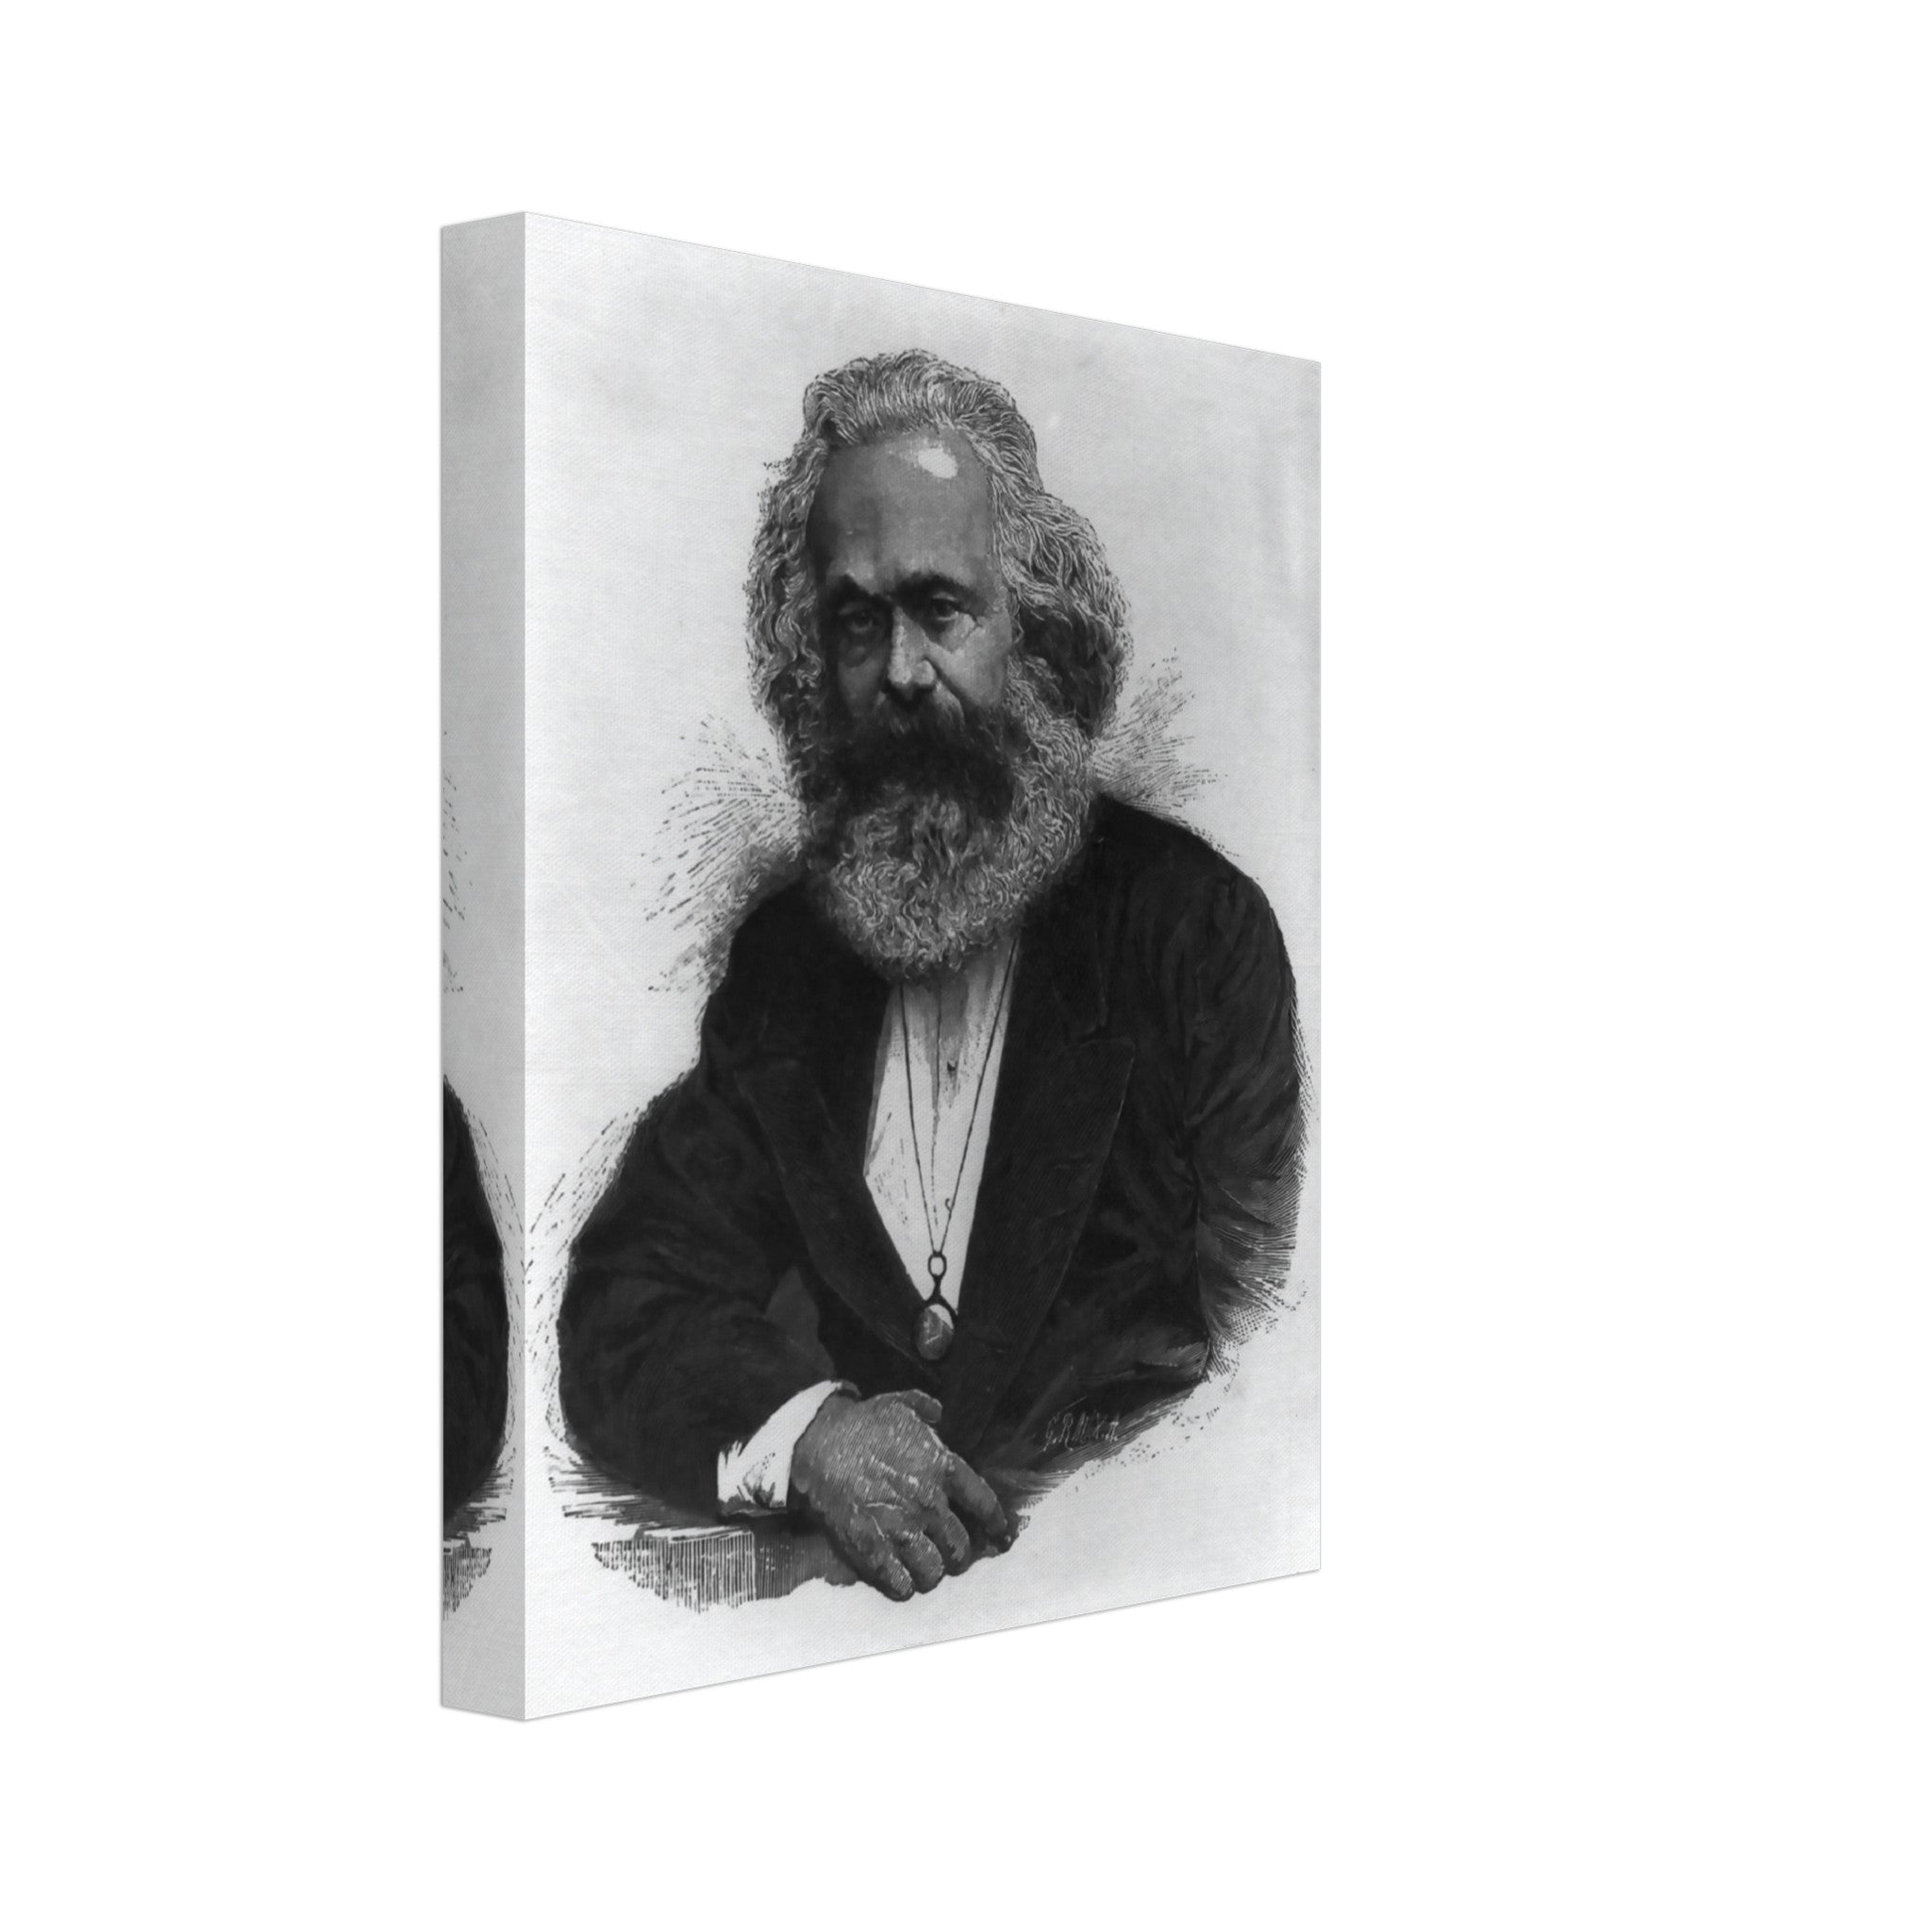 Karl Marx Canvas, Socialist Revolutionary, Vintage Photo - Iconic Karl Marx Canvas Print - Marxist Politics Philosophy - WallArtPrints4U